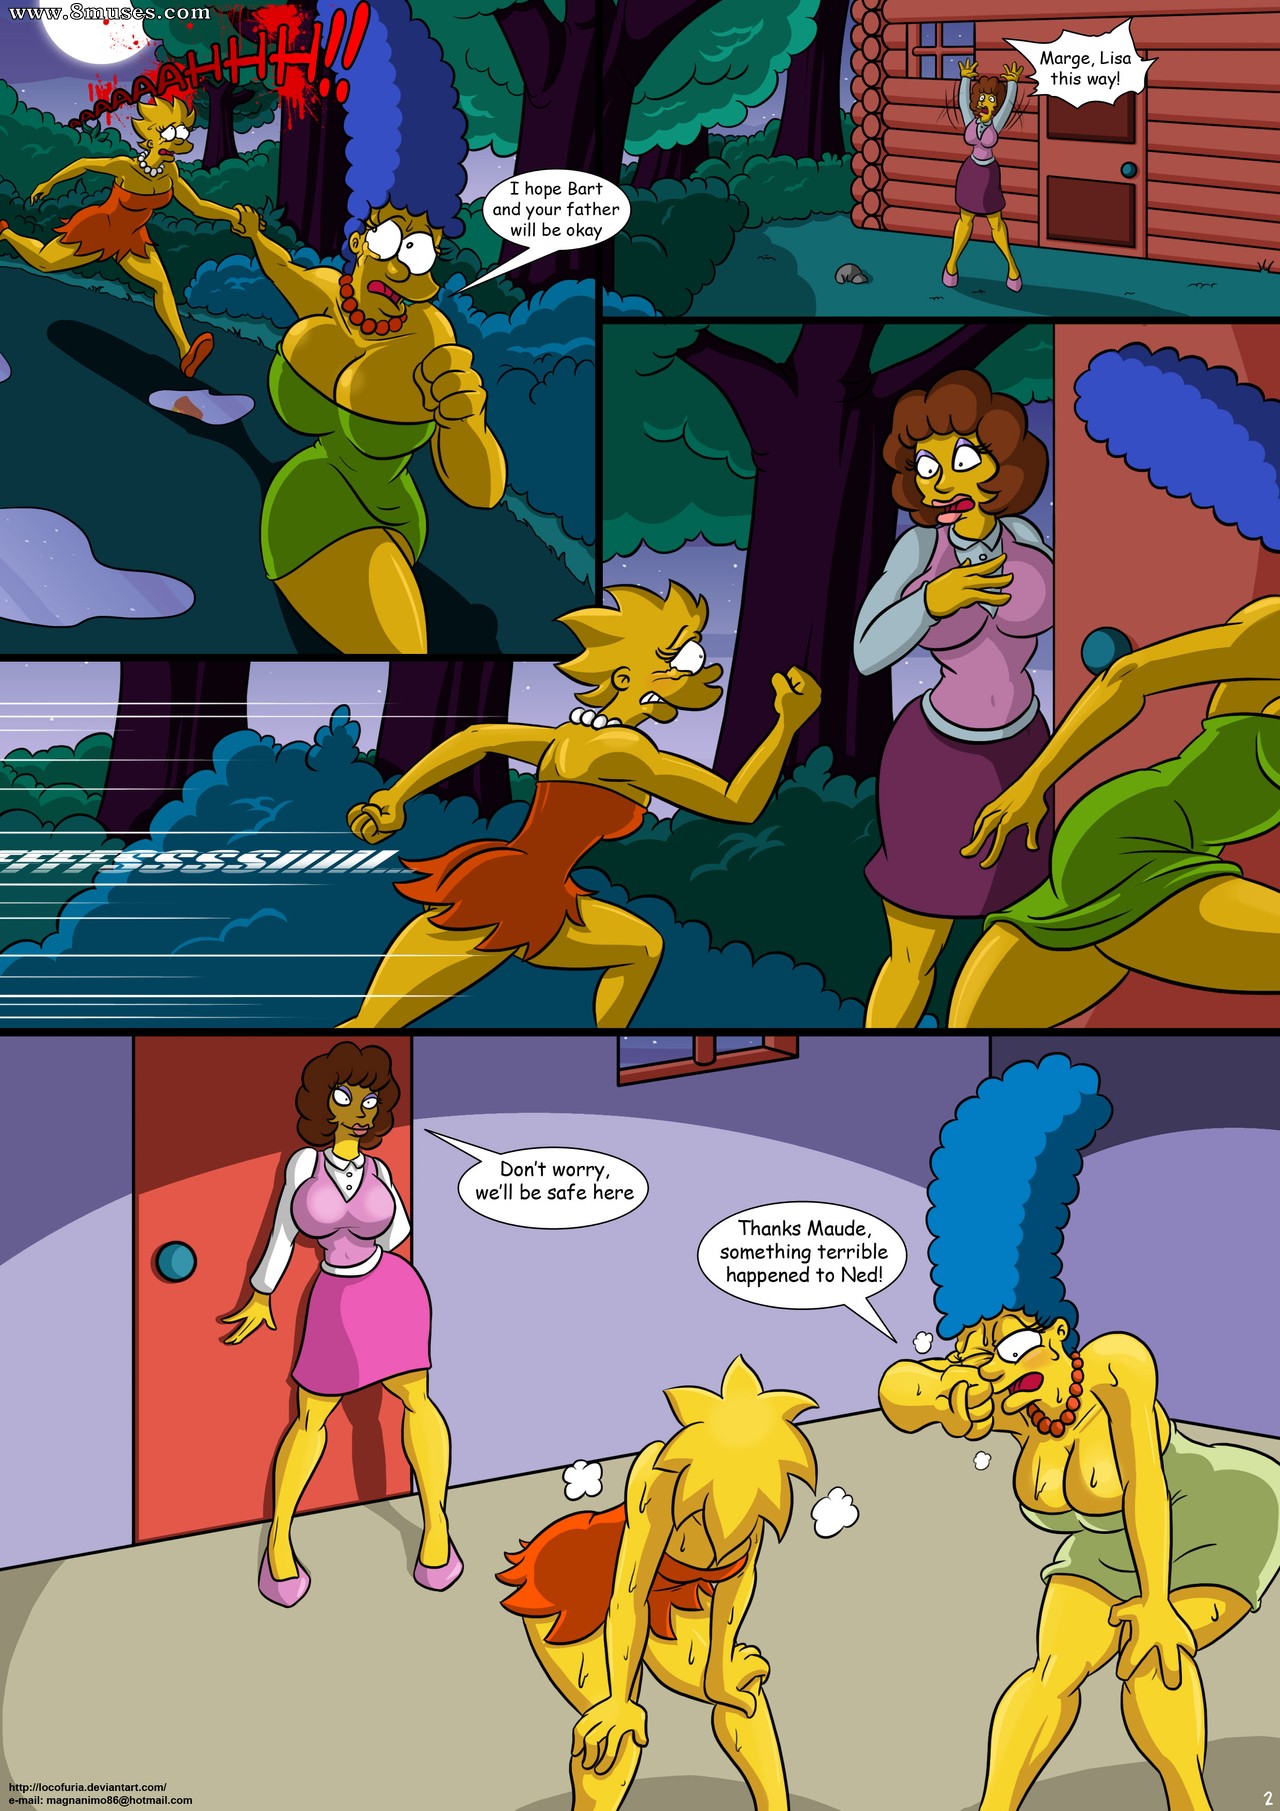 Bangbros Porn Comics - The Simpsons Porn: Treehouse of Horror Issue 2 - 8muses Comics - Sex Comics  and Porn Cartoons